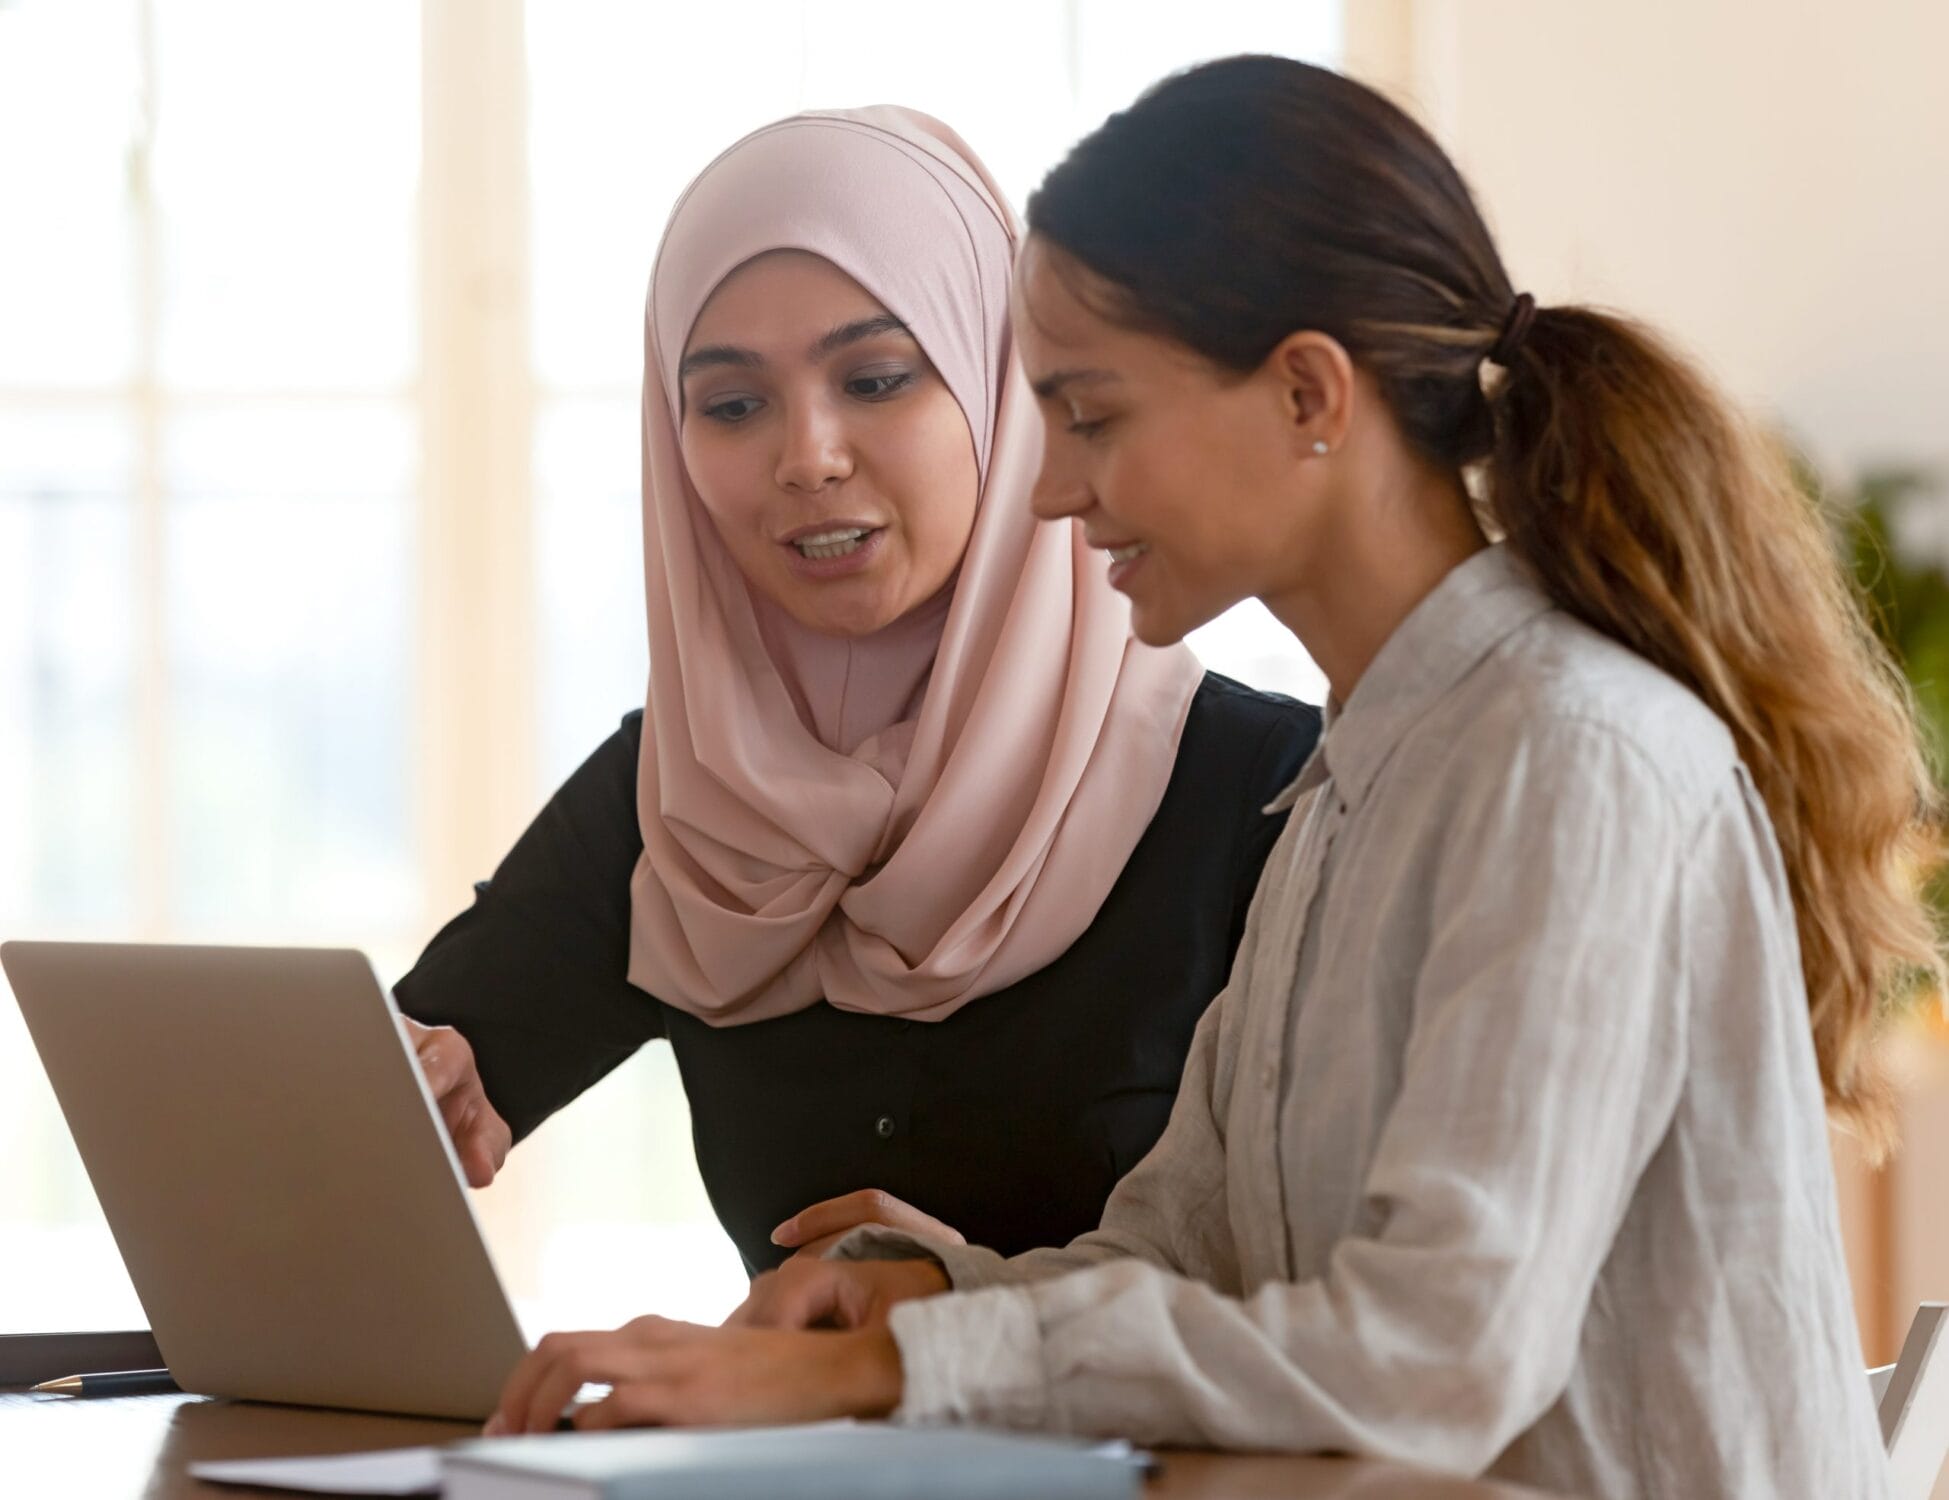 Female teacher wearing headscarf helping student